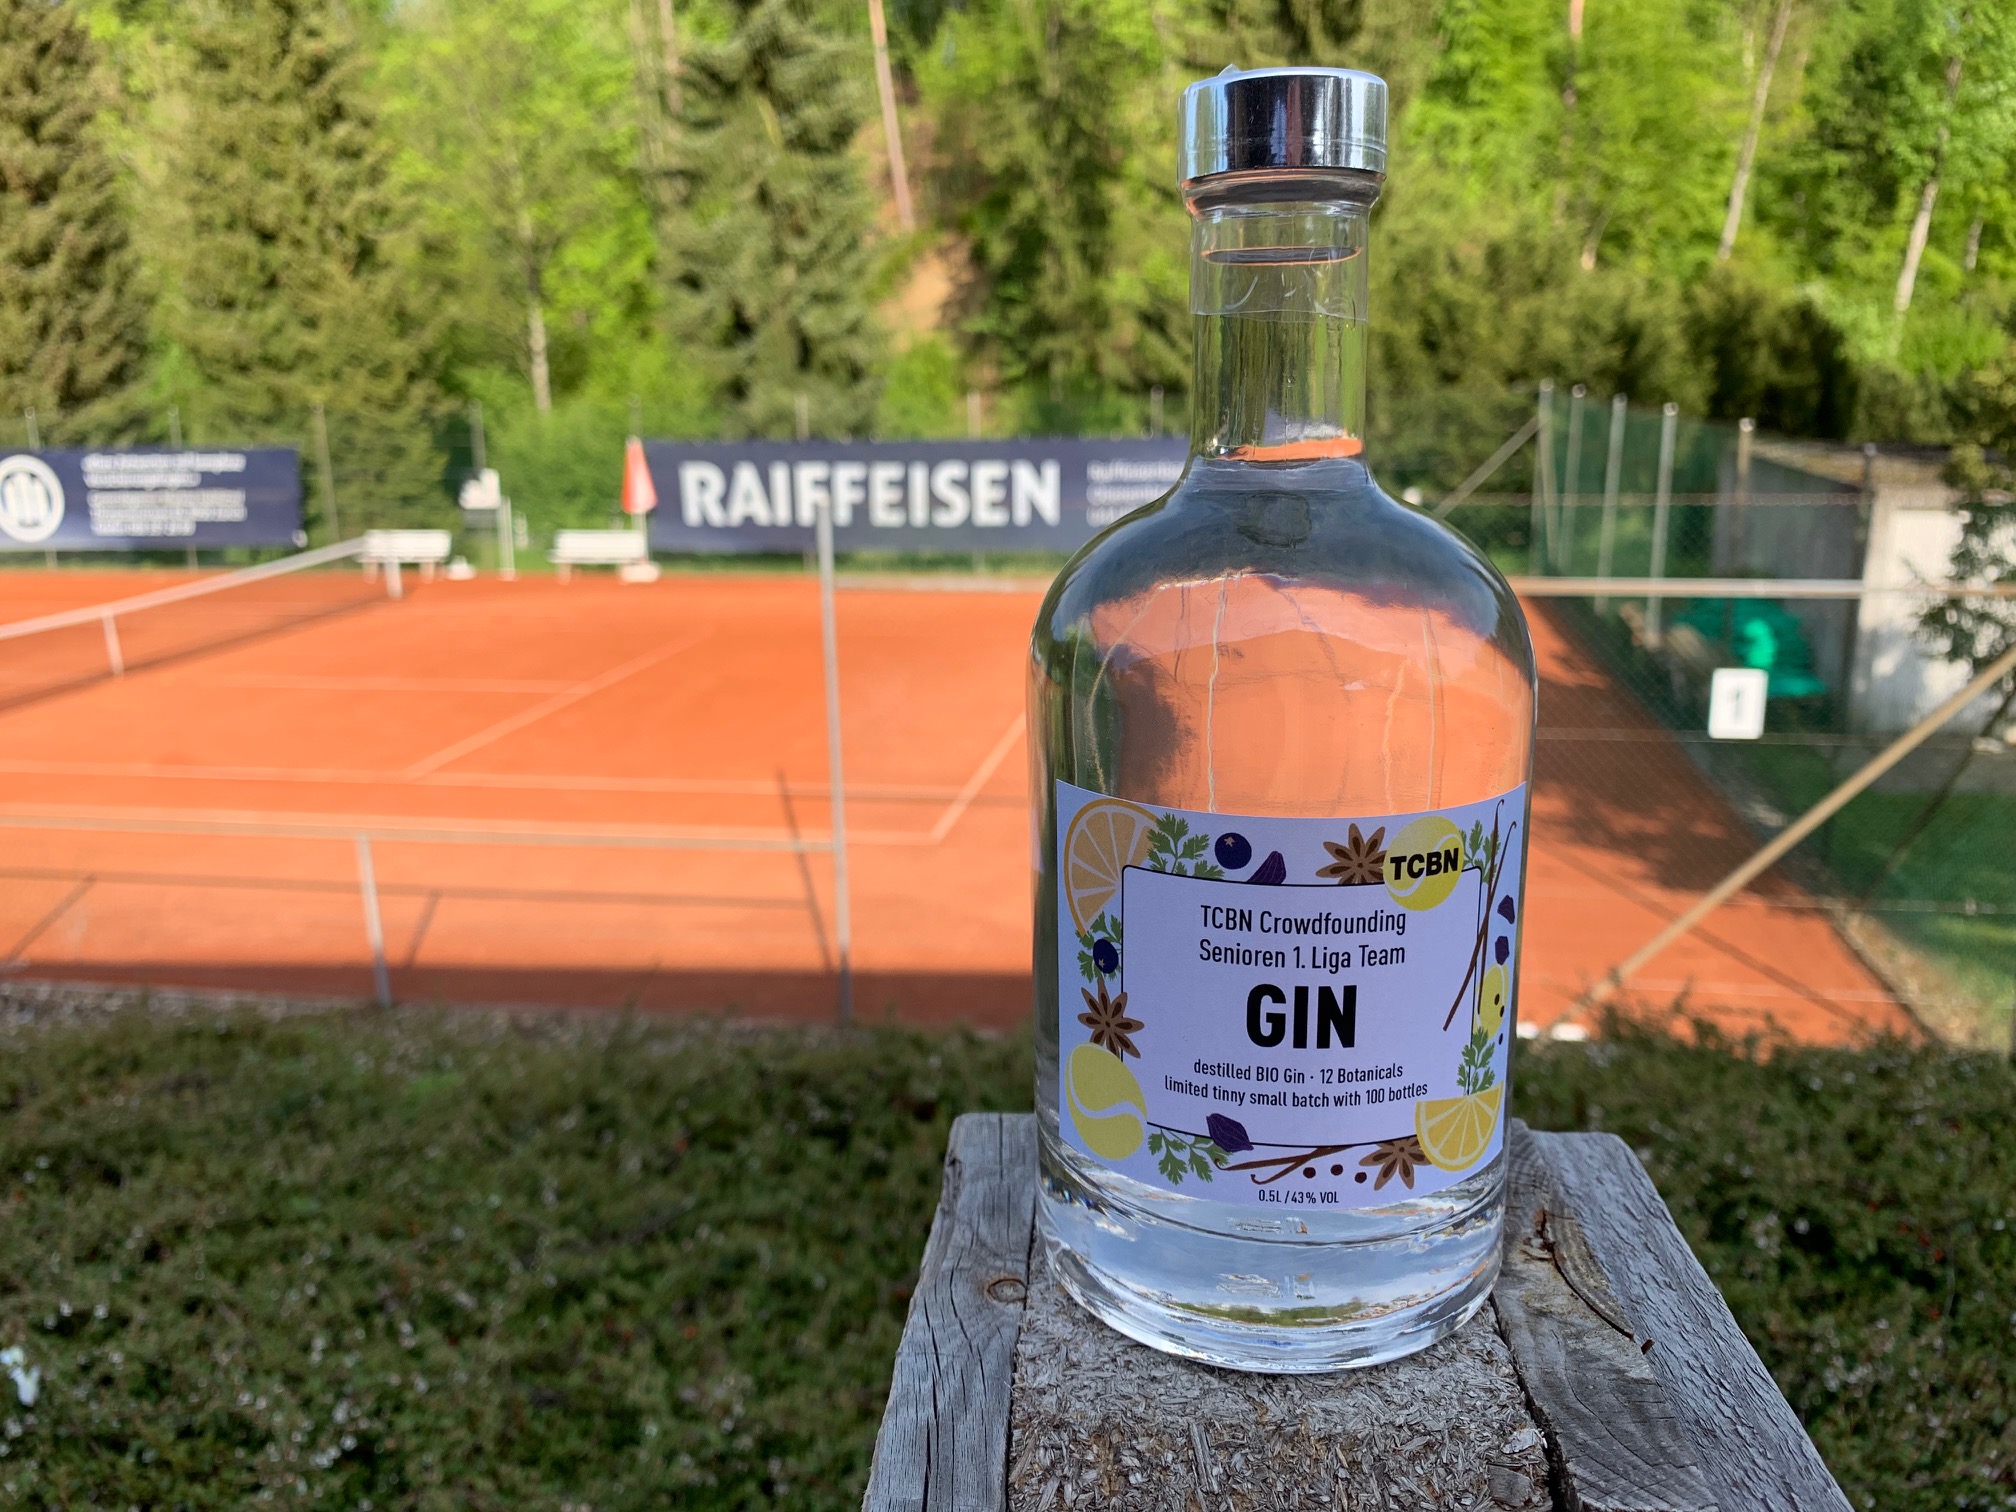 Tennis-Club Bassersdorf-Nürensdorf